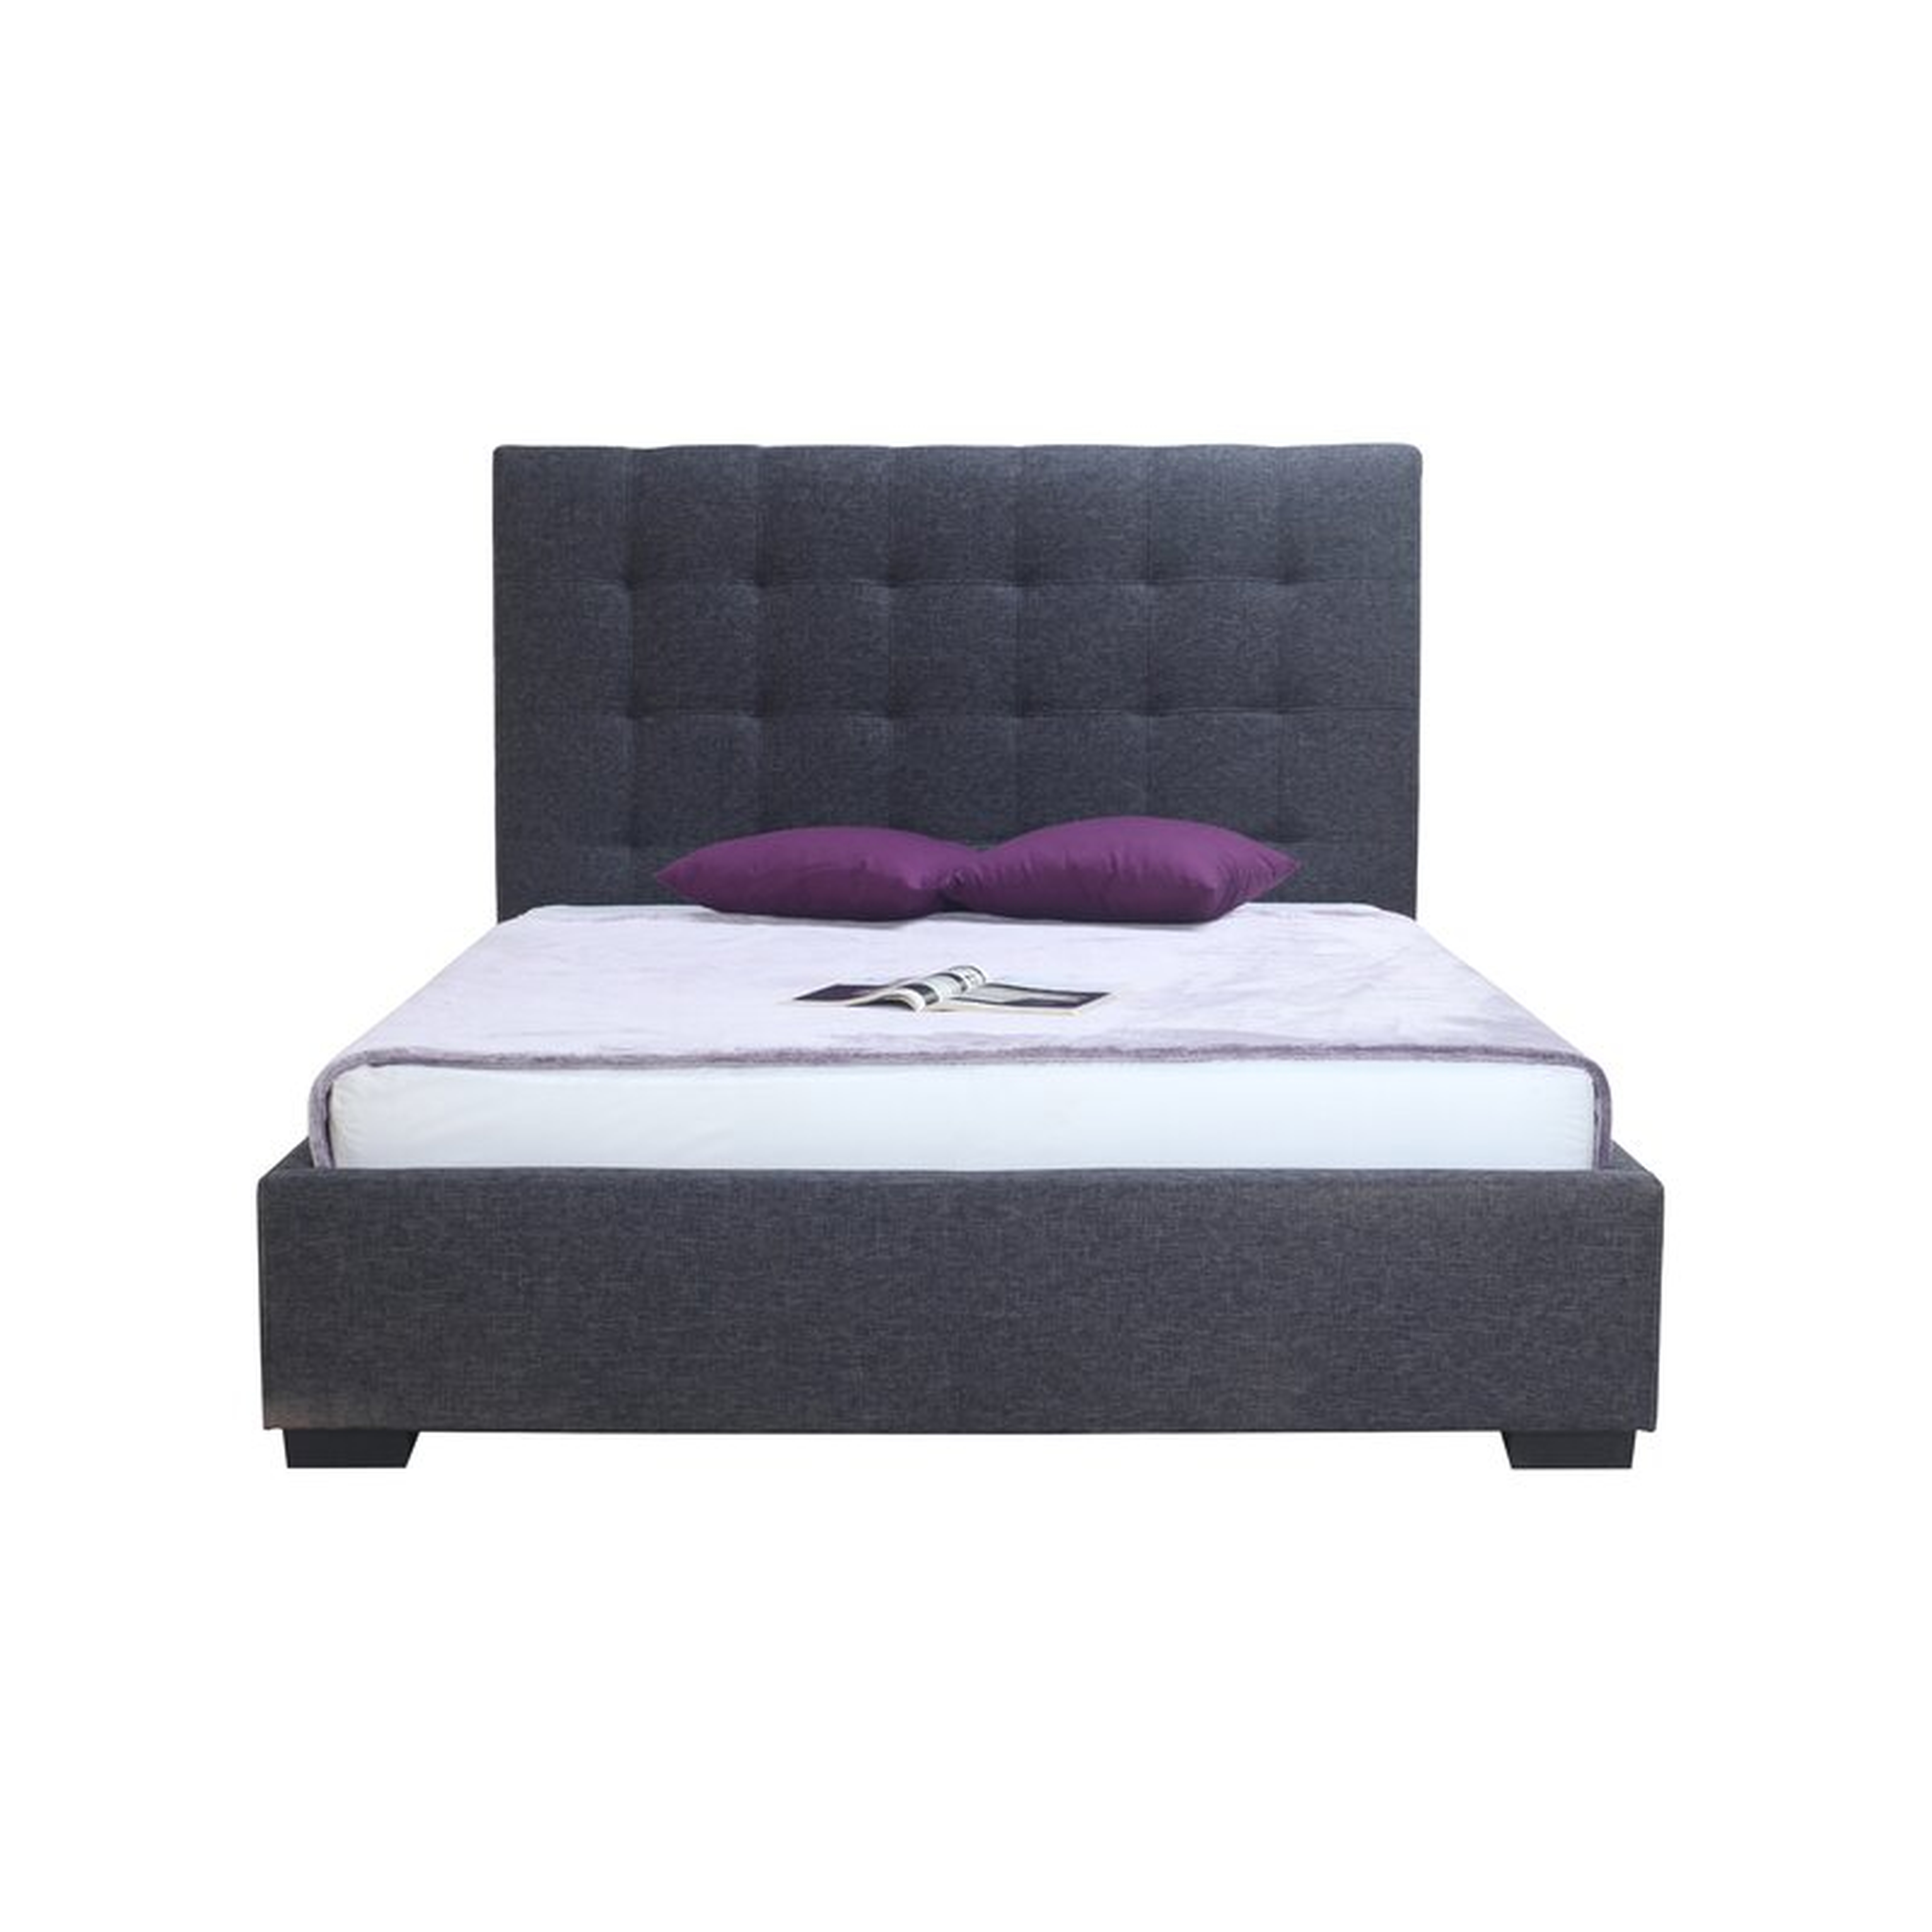 Moe's Home Collection Upholstered Storage Platform Bed Size: King, Color: Charcoal - Perigold